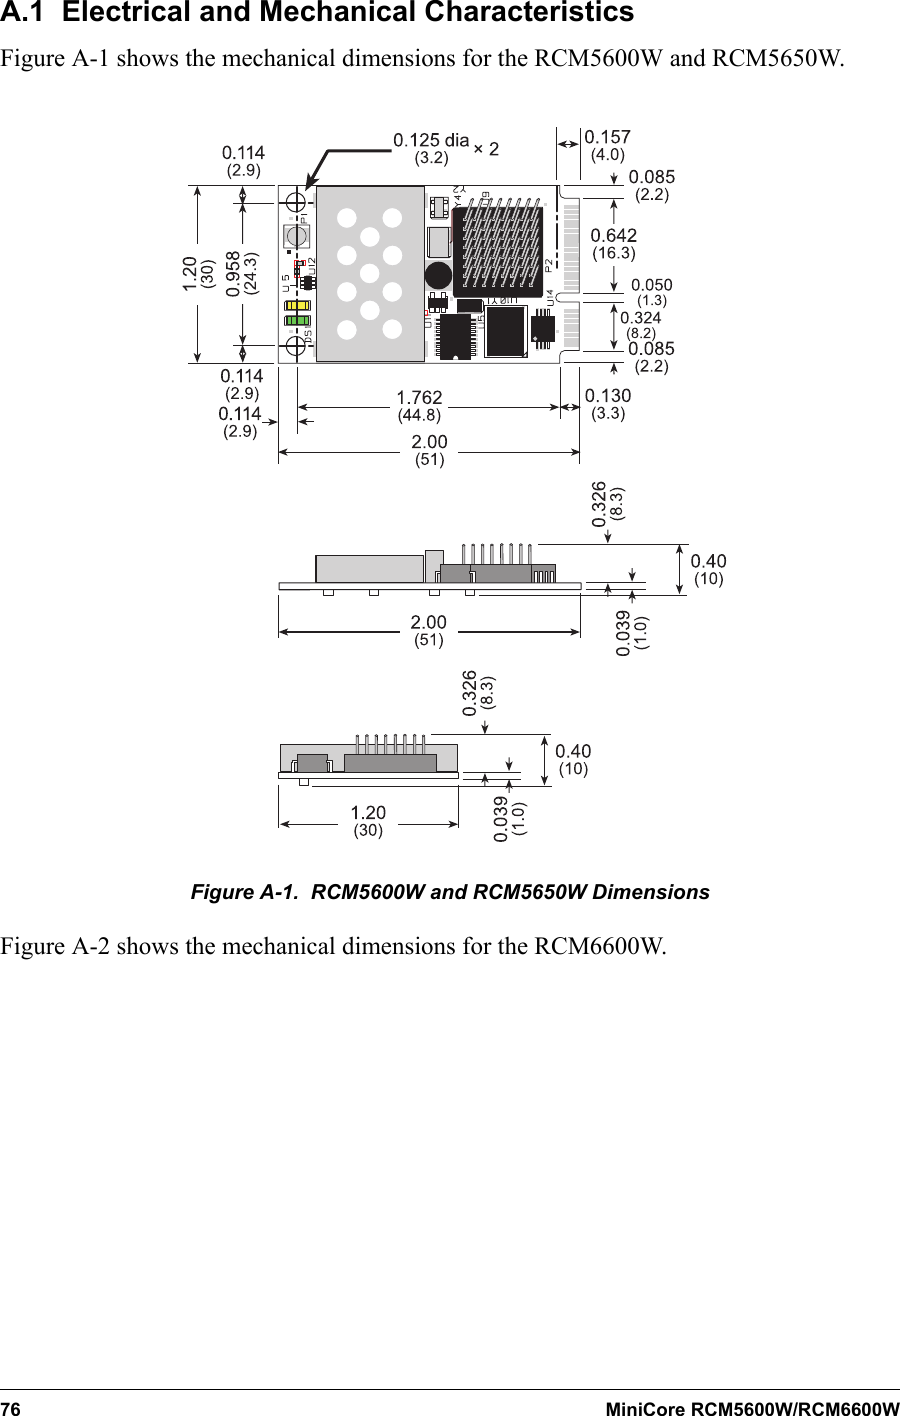 76 MiniCore RCM5600W/RCM6600WA.1  Electrical and Mechanical CharacteristicsFigure A-1 shows the mechanical dimensions for the RCM5600W and RCM5650W.Figure A-1.  RCM5600W and RCM5650W DimensionsFigure A-2 shows the mechanical dimensions for the RCM6600W.